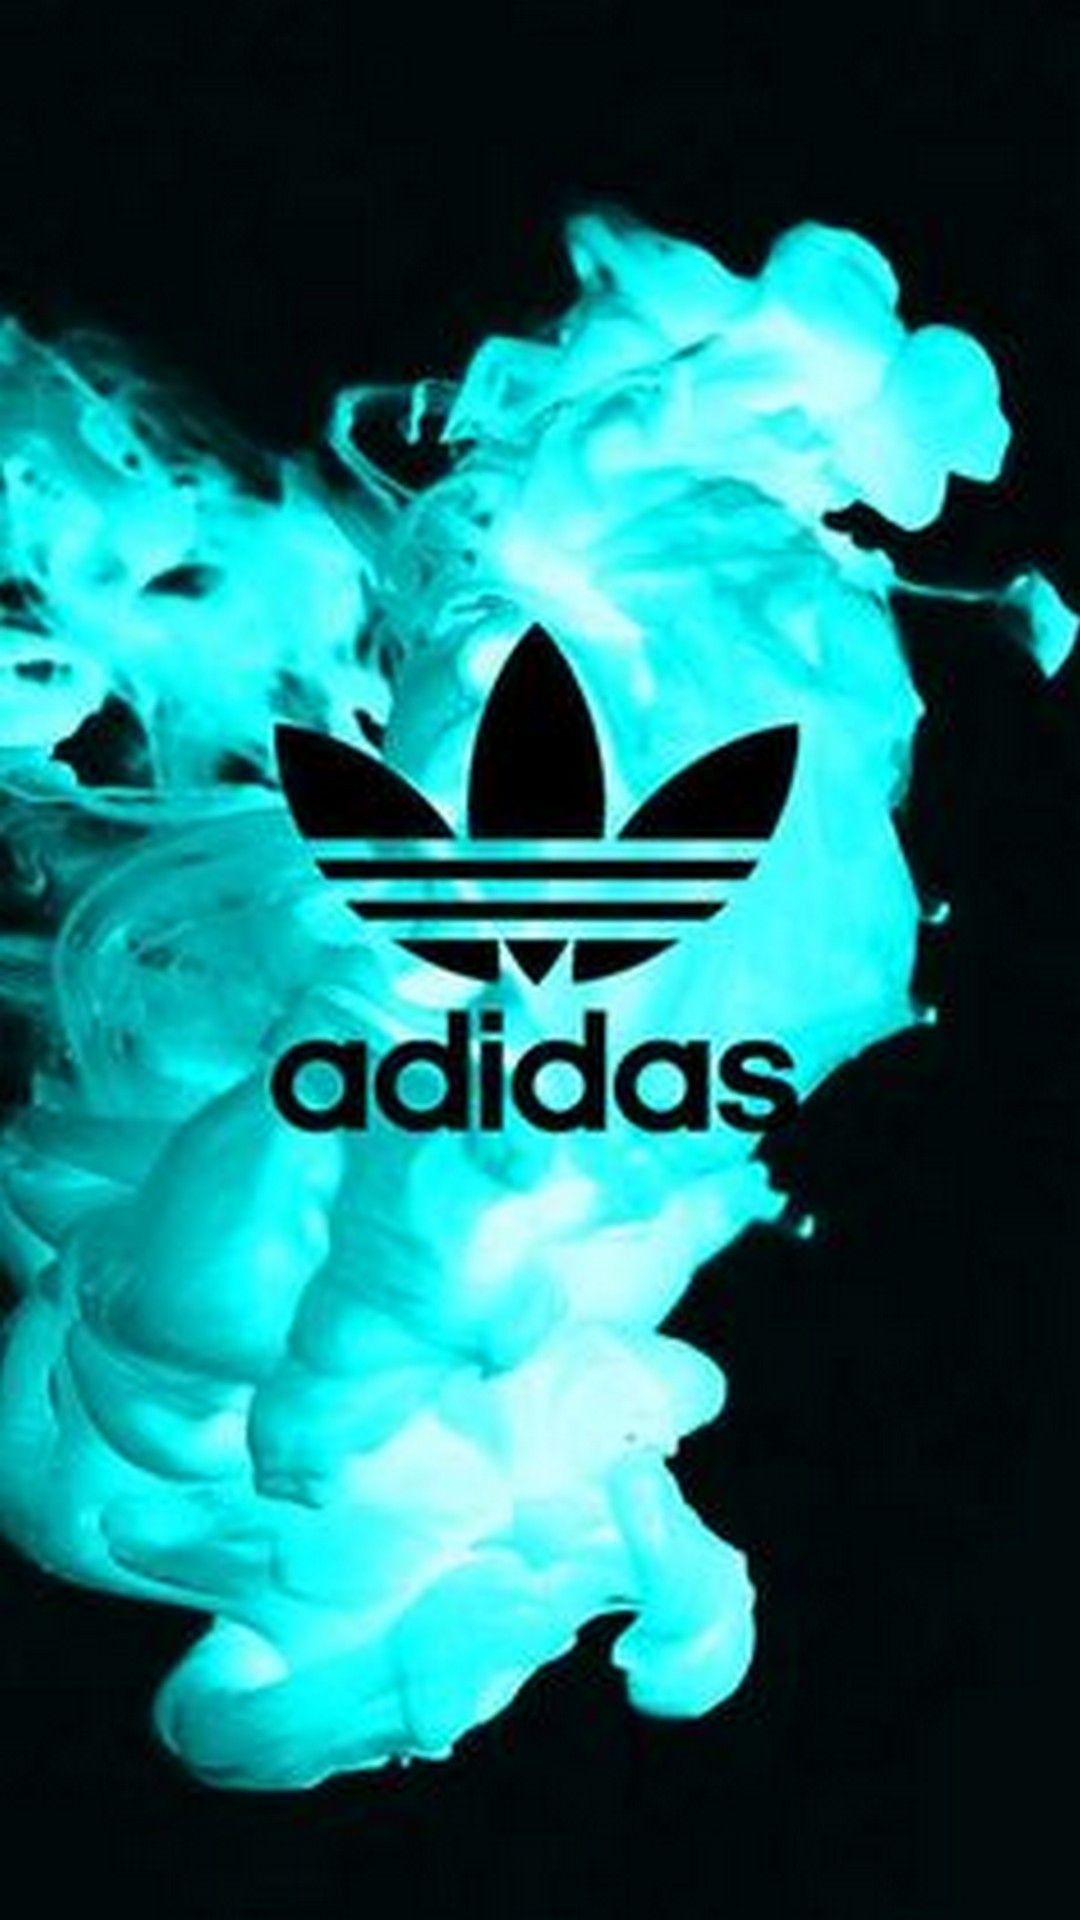 Adidas Phone Wallpapers